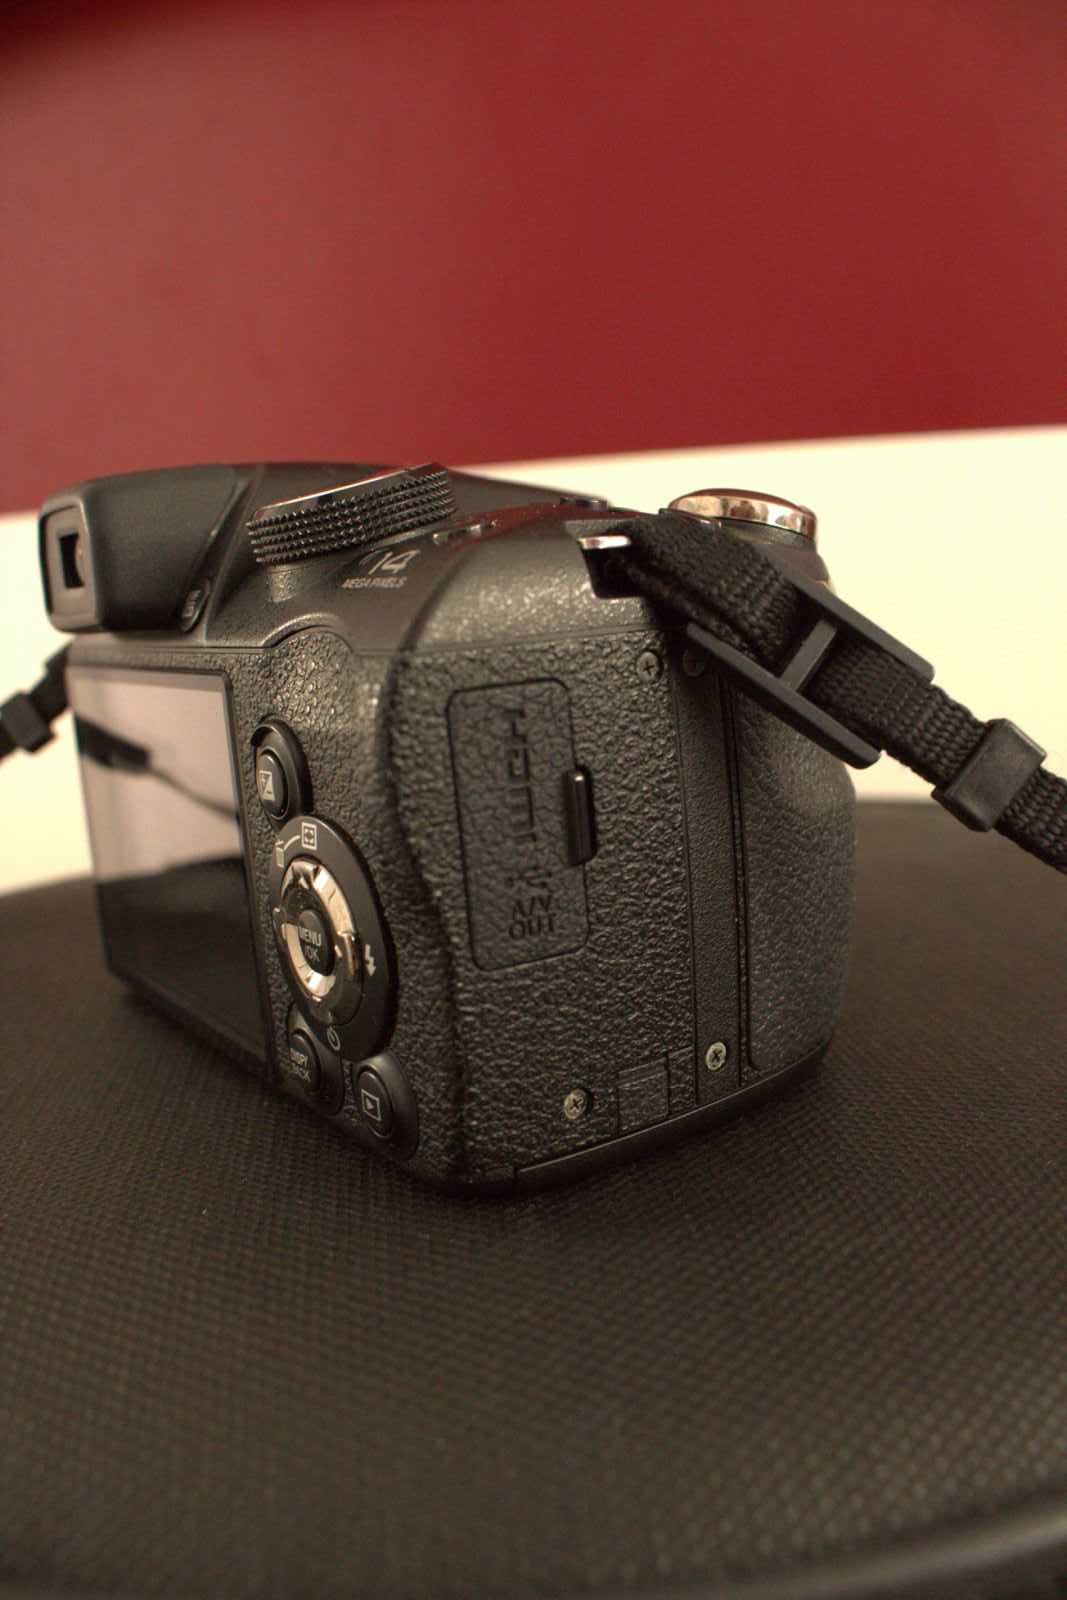 Фотоапарат Fujifilm FinePix S3300